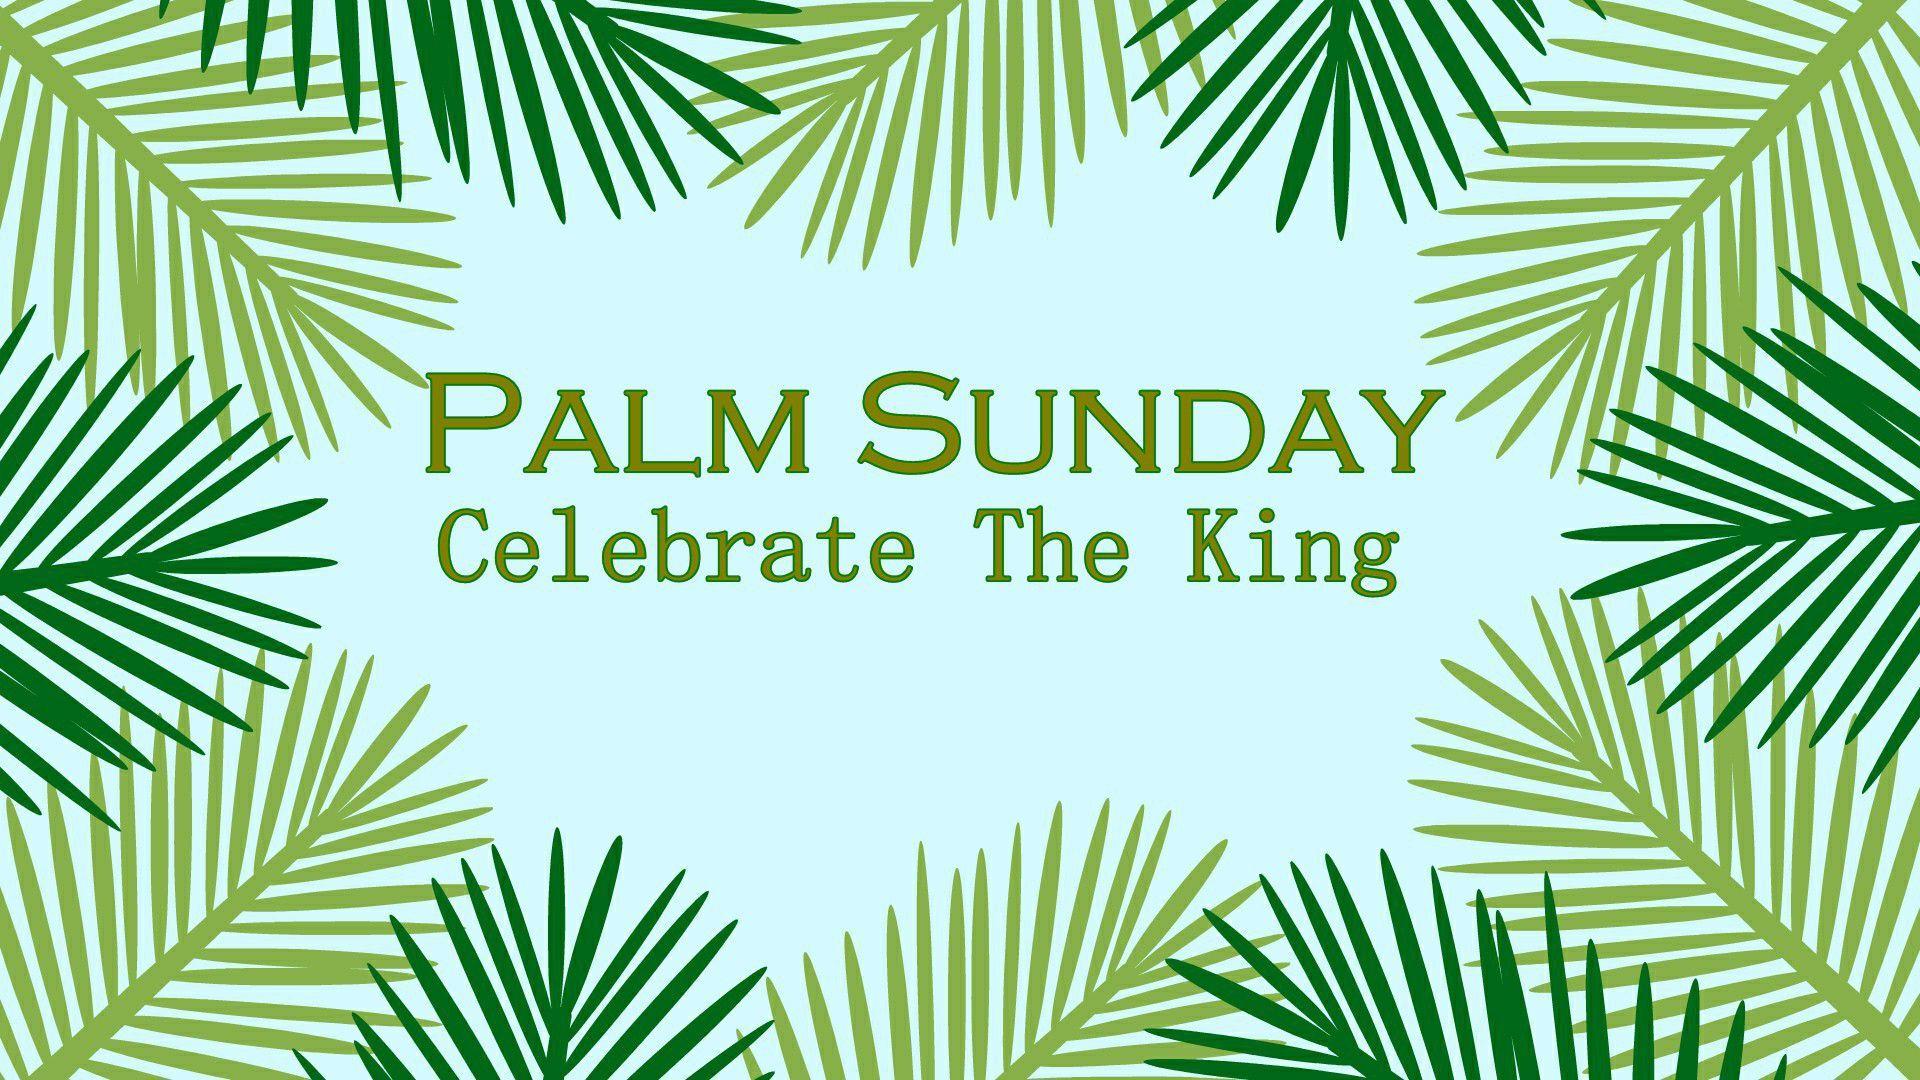 Palm Sunday Whatapp Wallpaper Free Download